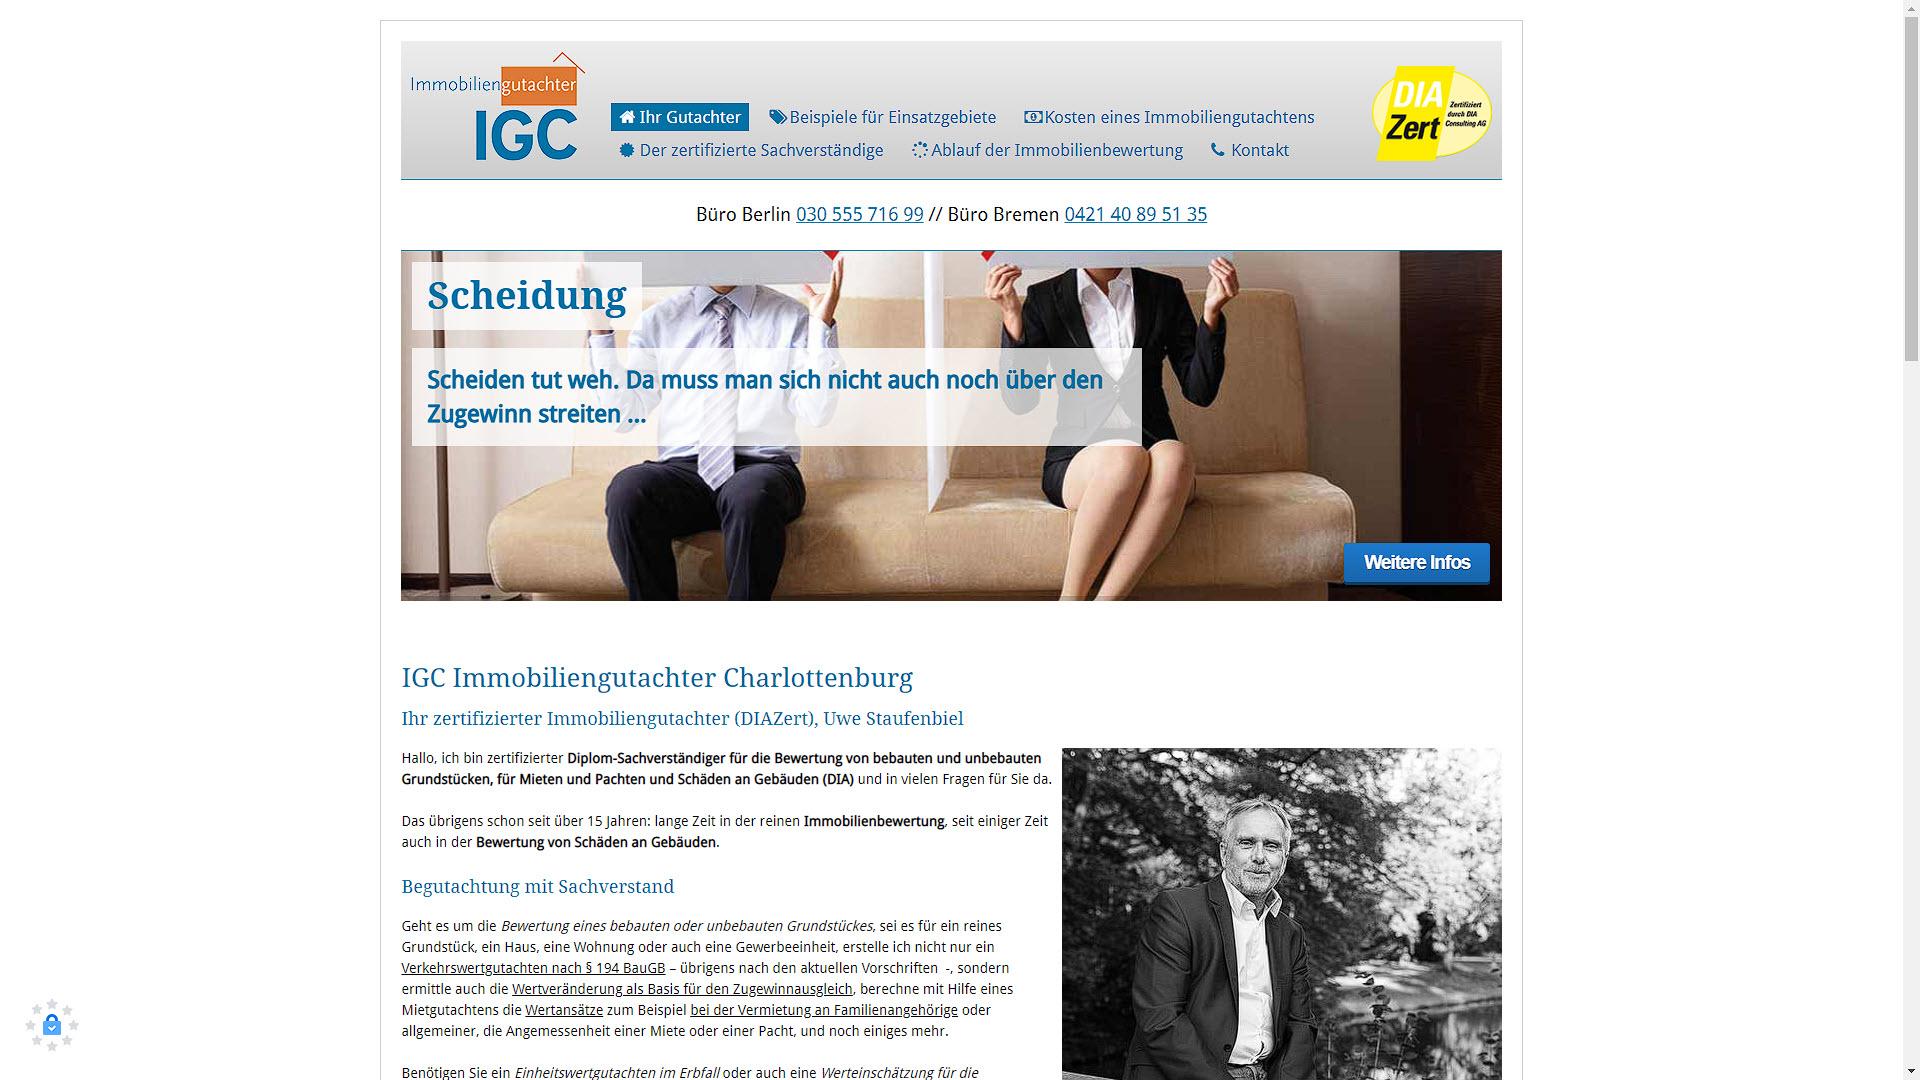 IGC - Immobiliengutachter Charlottenburg, Berlin